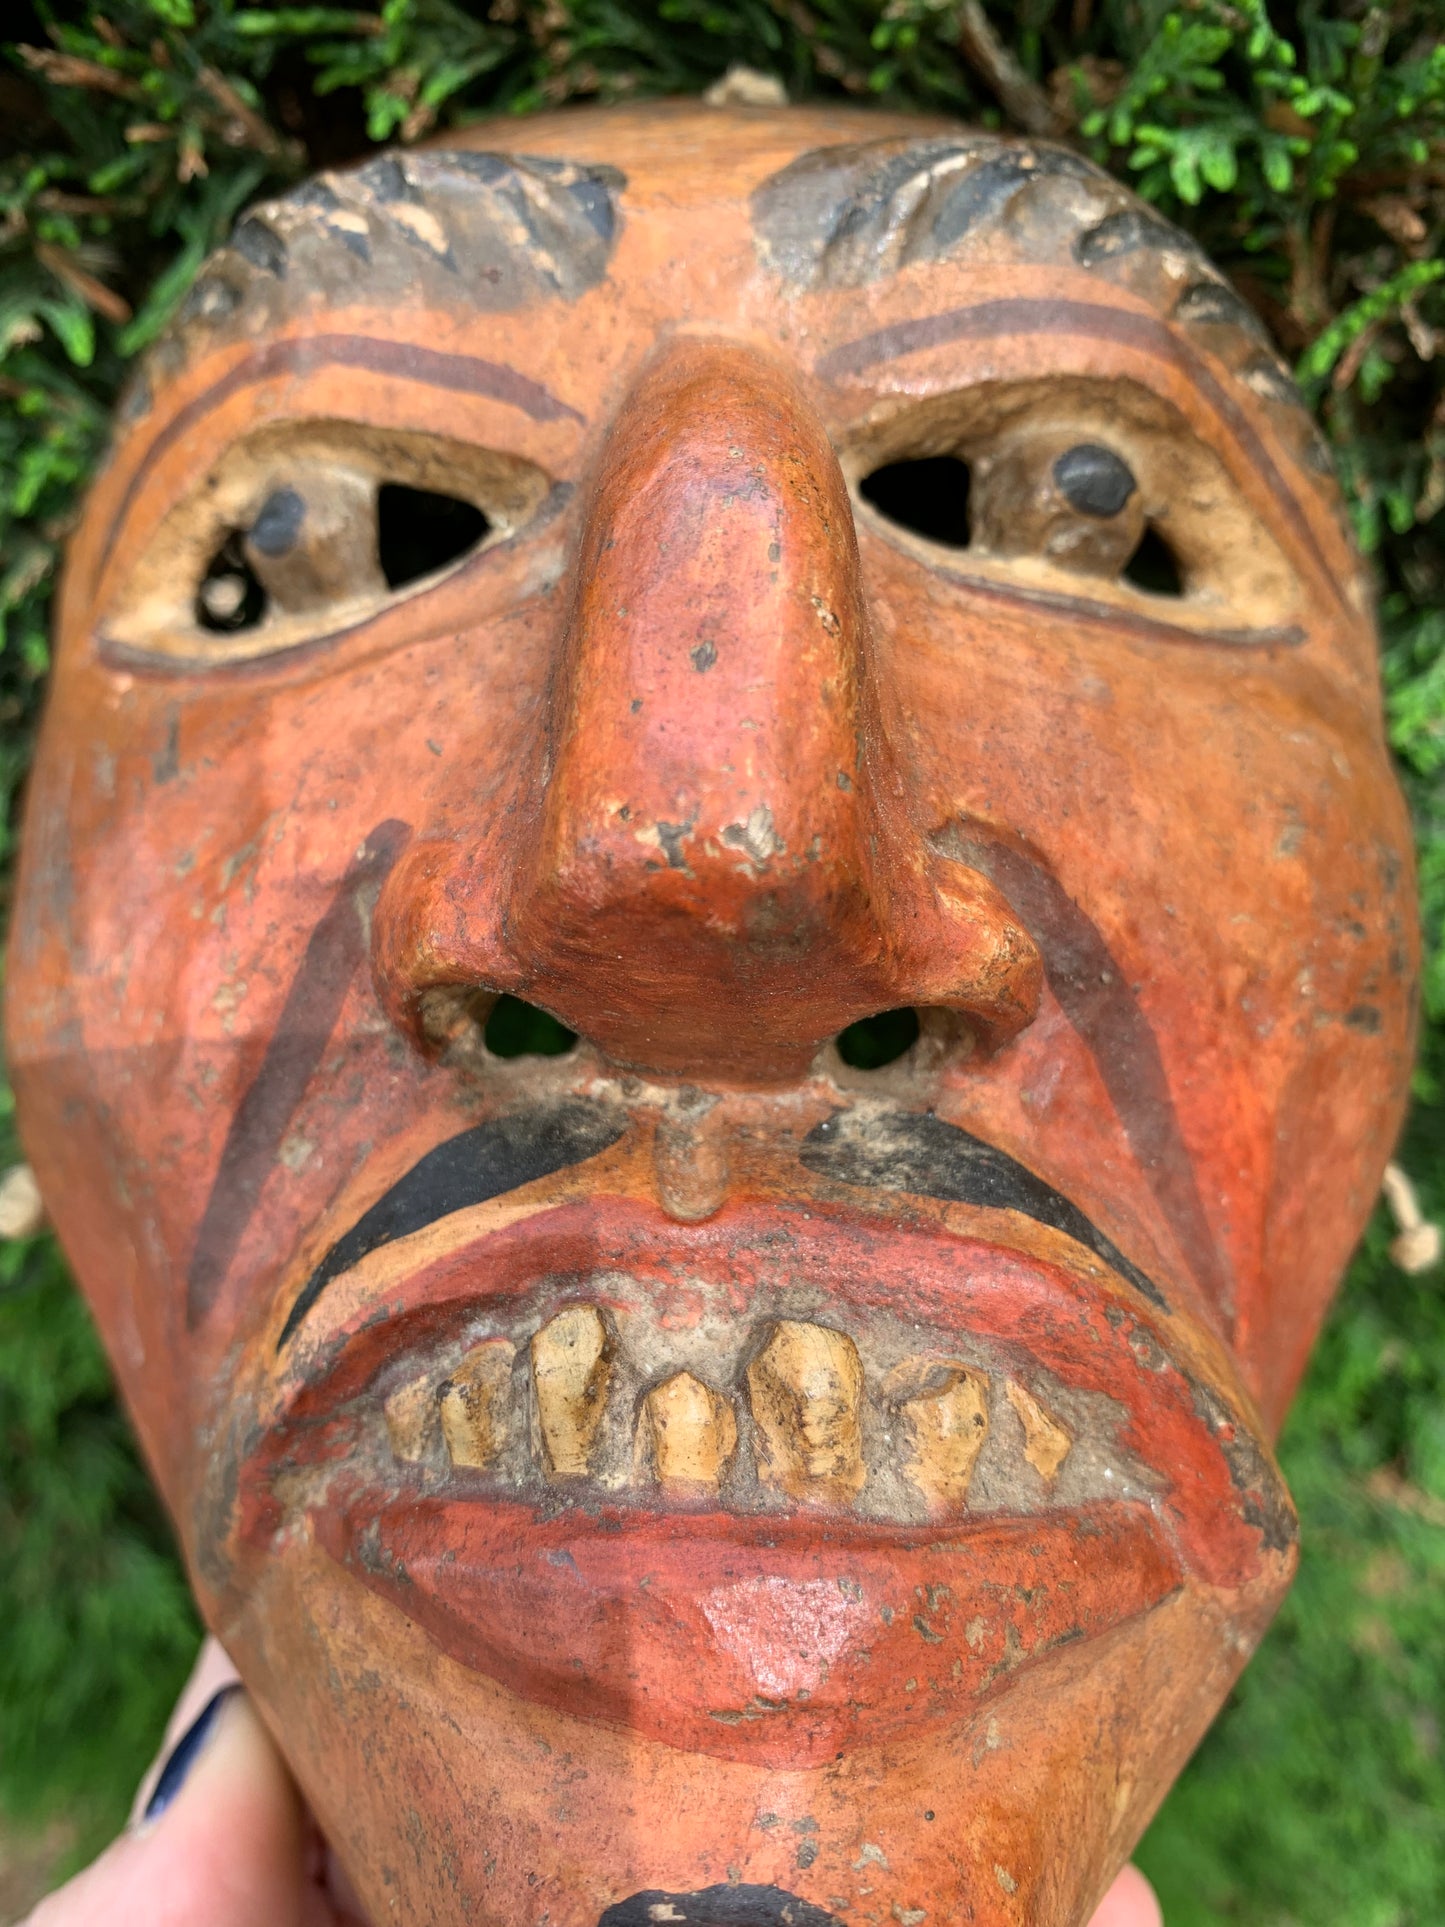 Guatemala. Mask of Baila de la Conquista. Early XX century